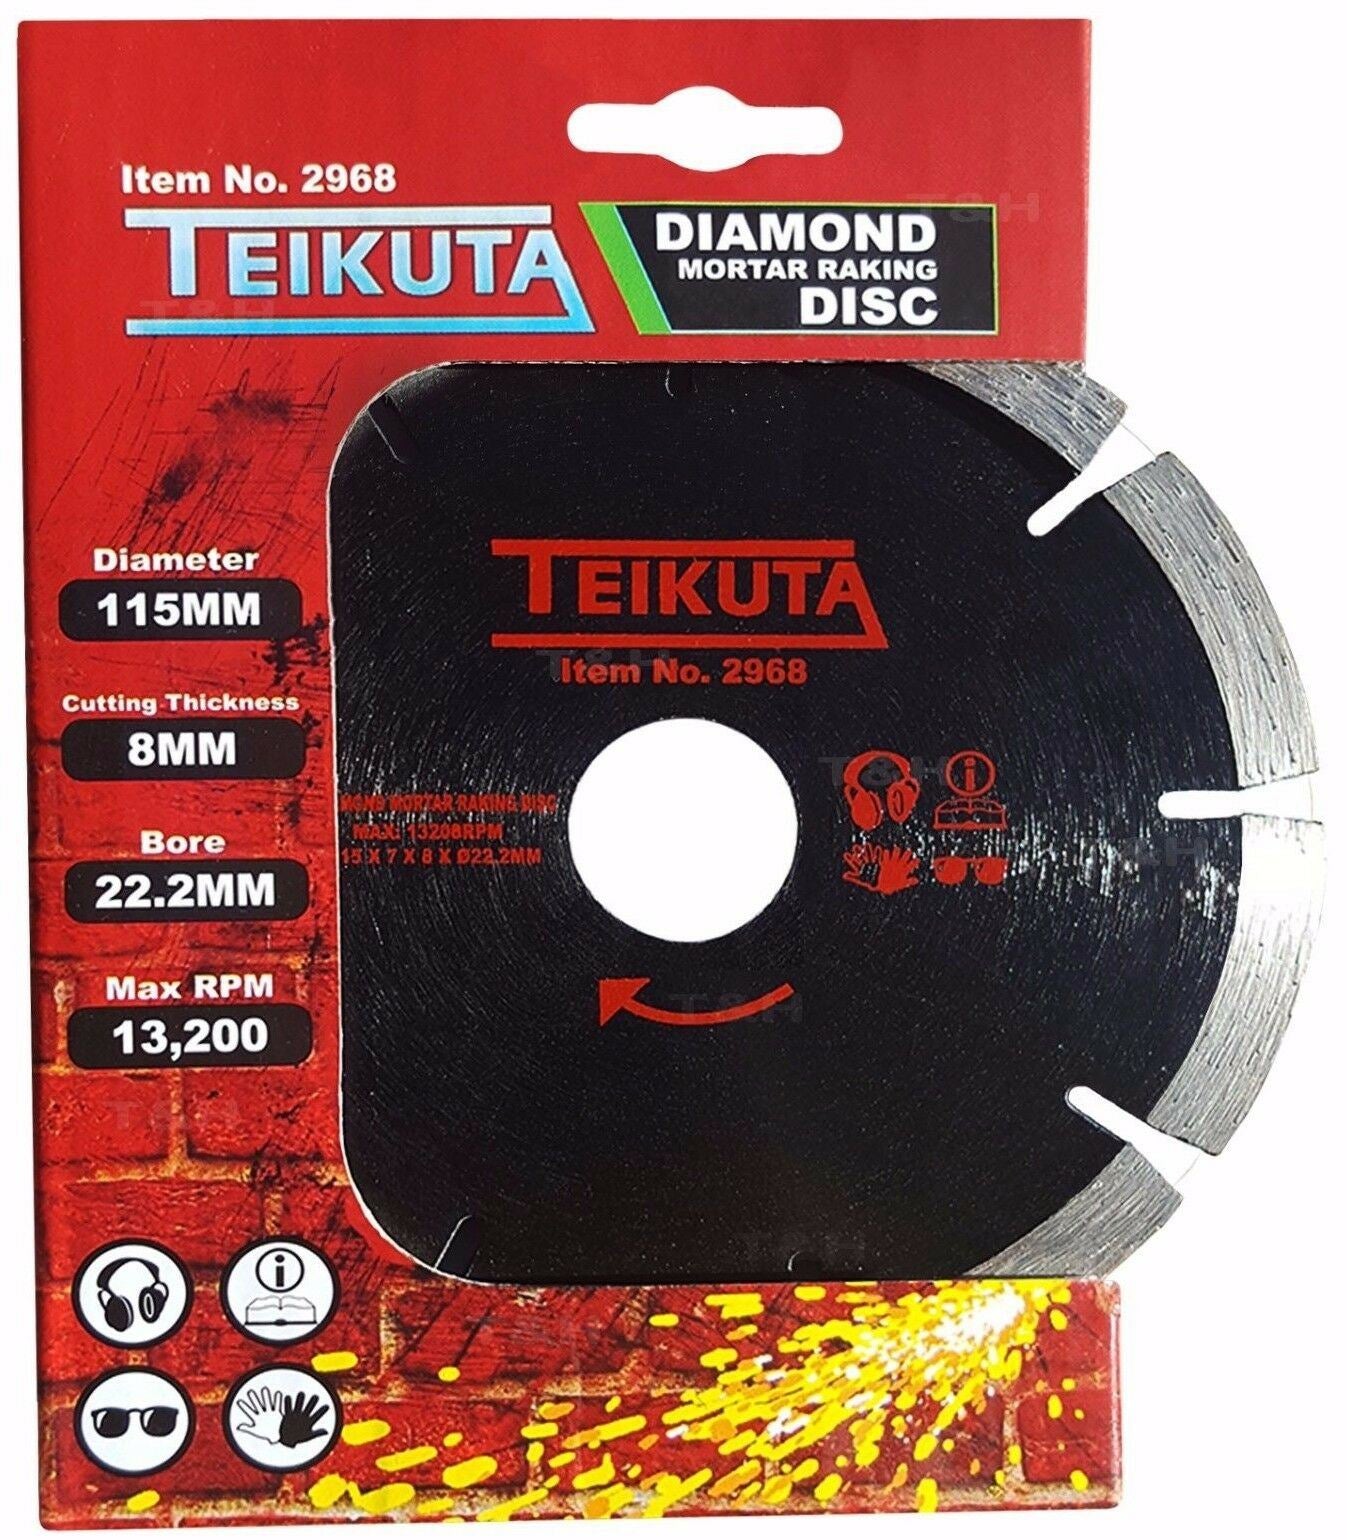 TEIKUTA 4.5" ( 115MM ) DIAMOND MORTAR RAKING DISC ( X 2 )